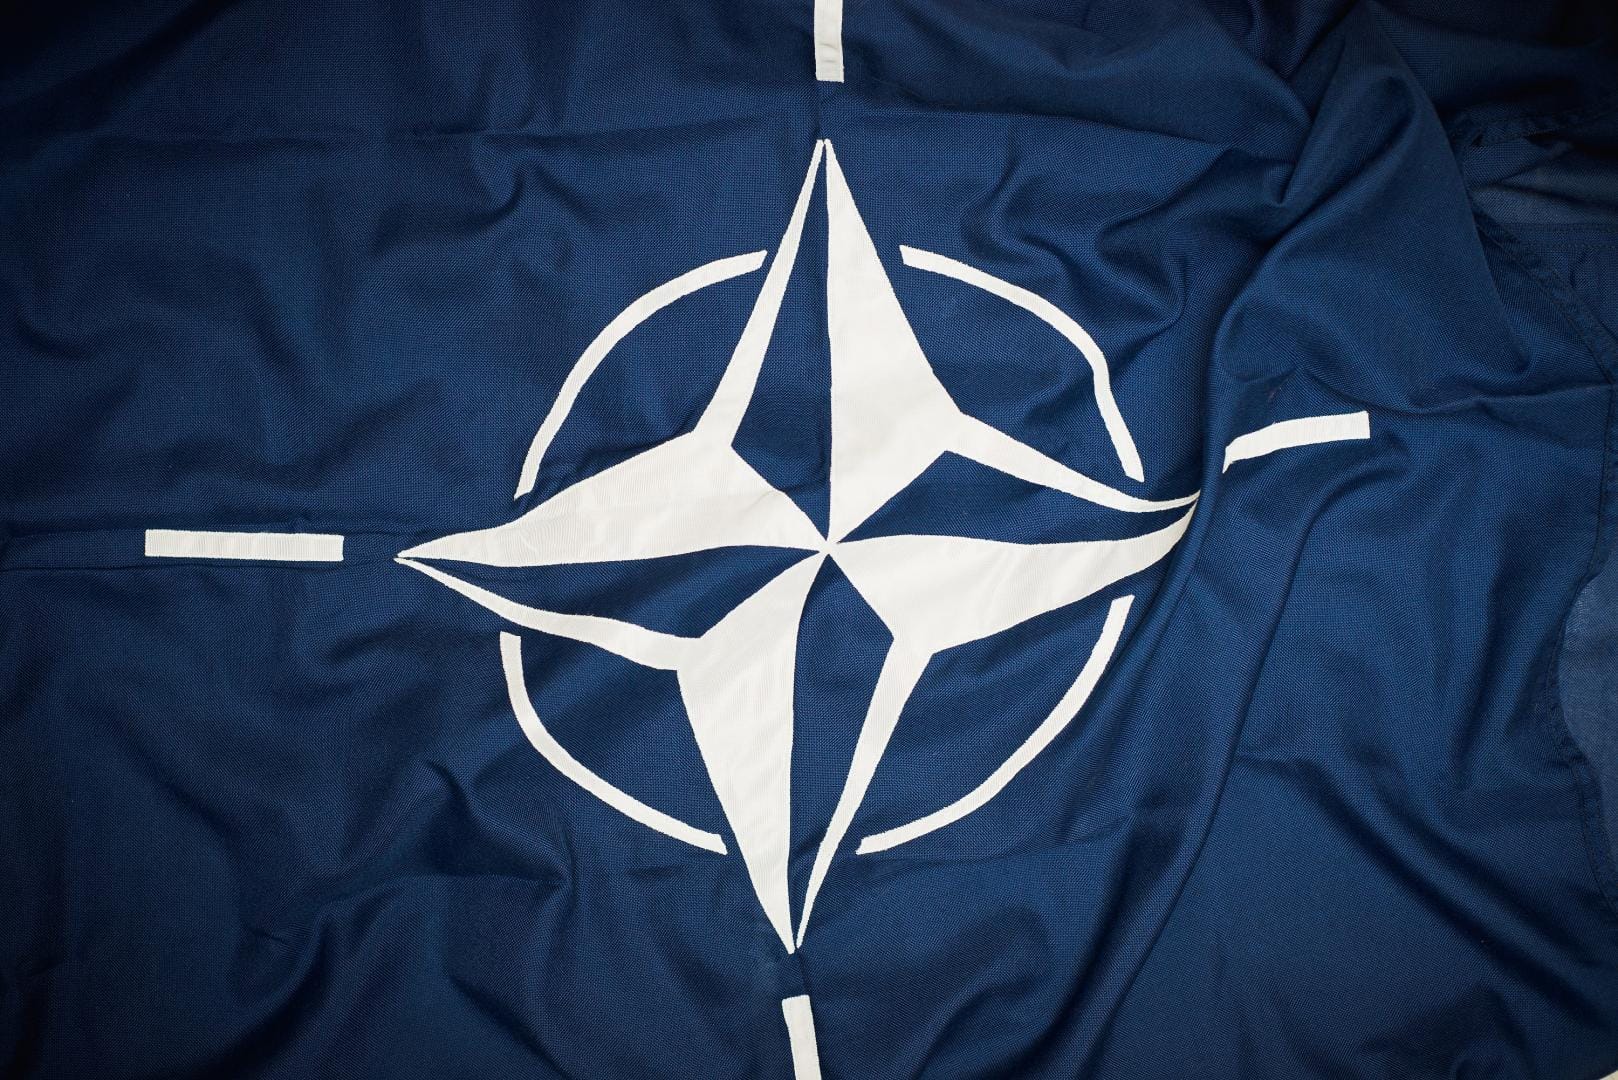 Relația NATO-Georgia este complicată